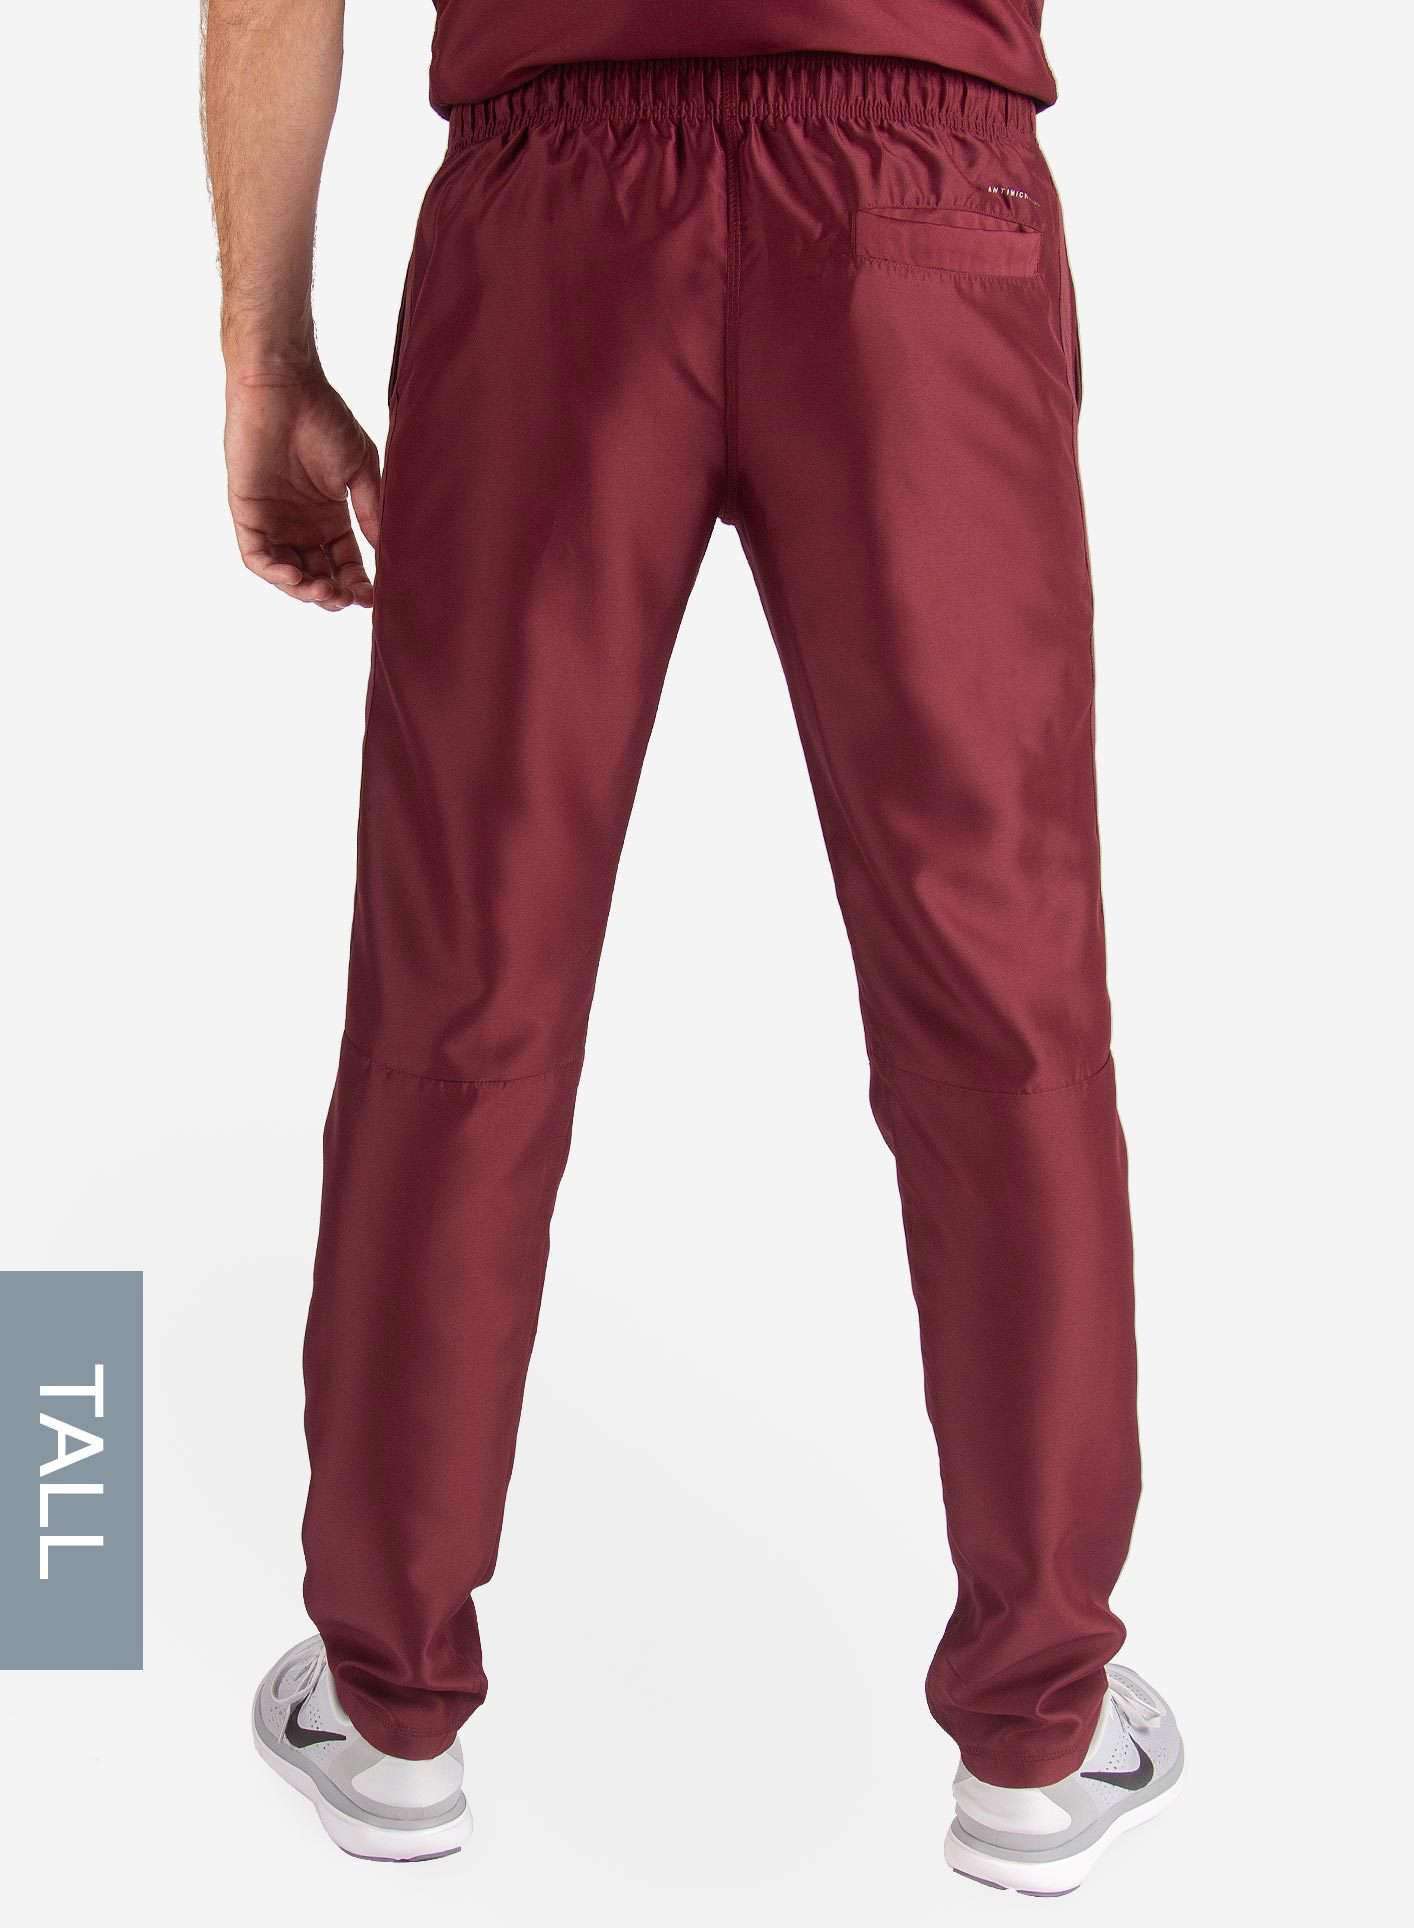 Men's Tall Slim Fit Scrub Pants in Bold burgundy  